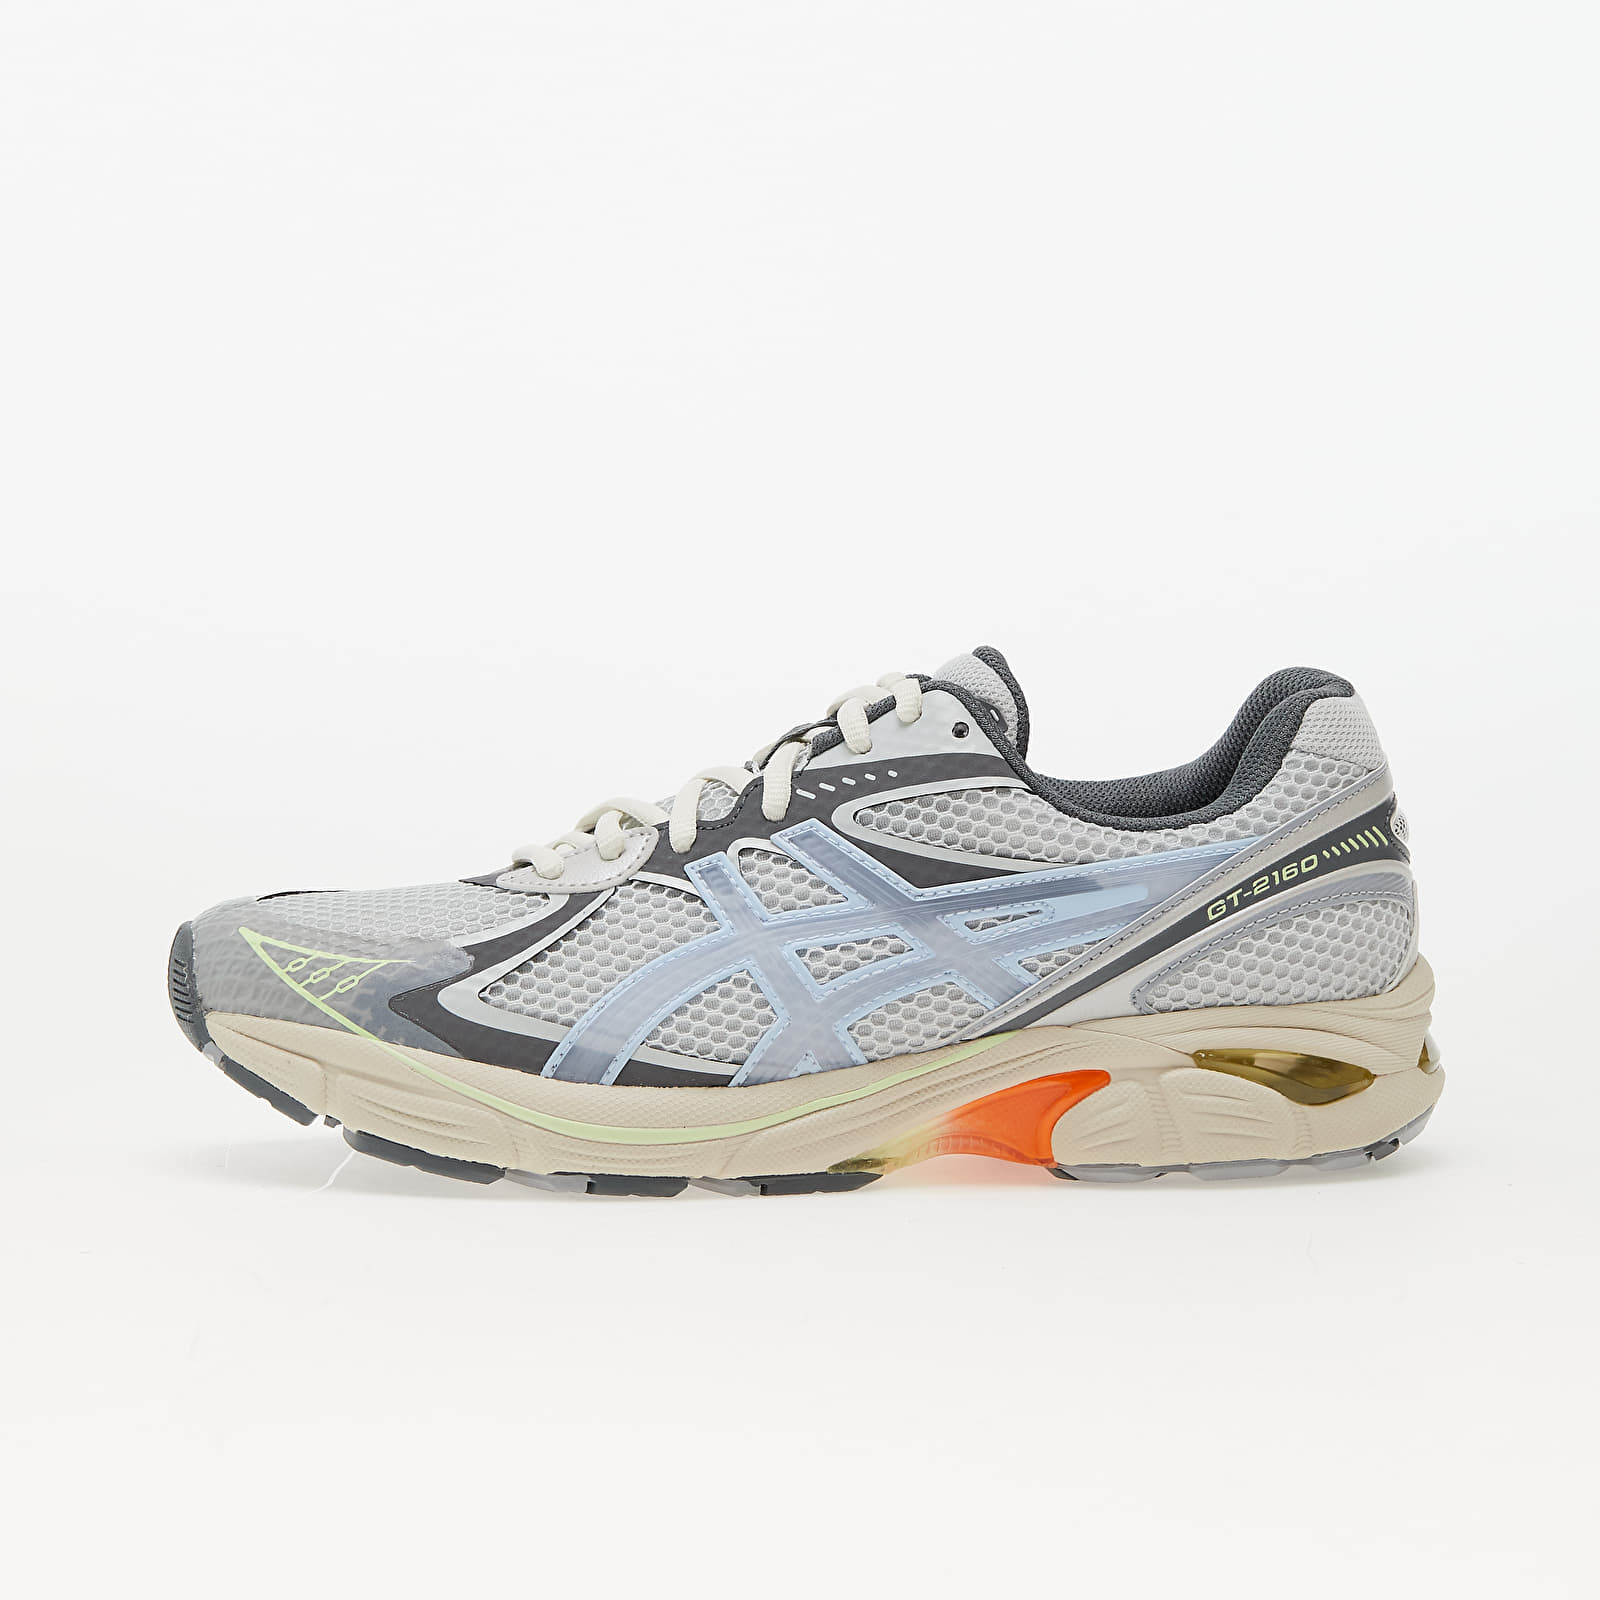 Men's shoes Asics Gt-2160 "Kogarashi" Glacier Grey/ Steel Grey